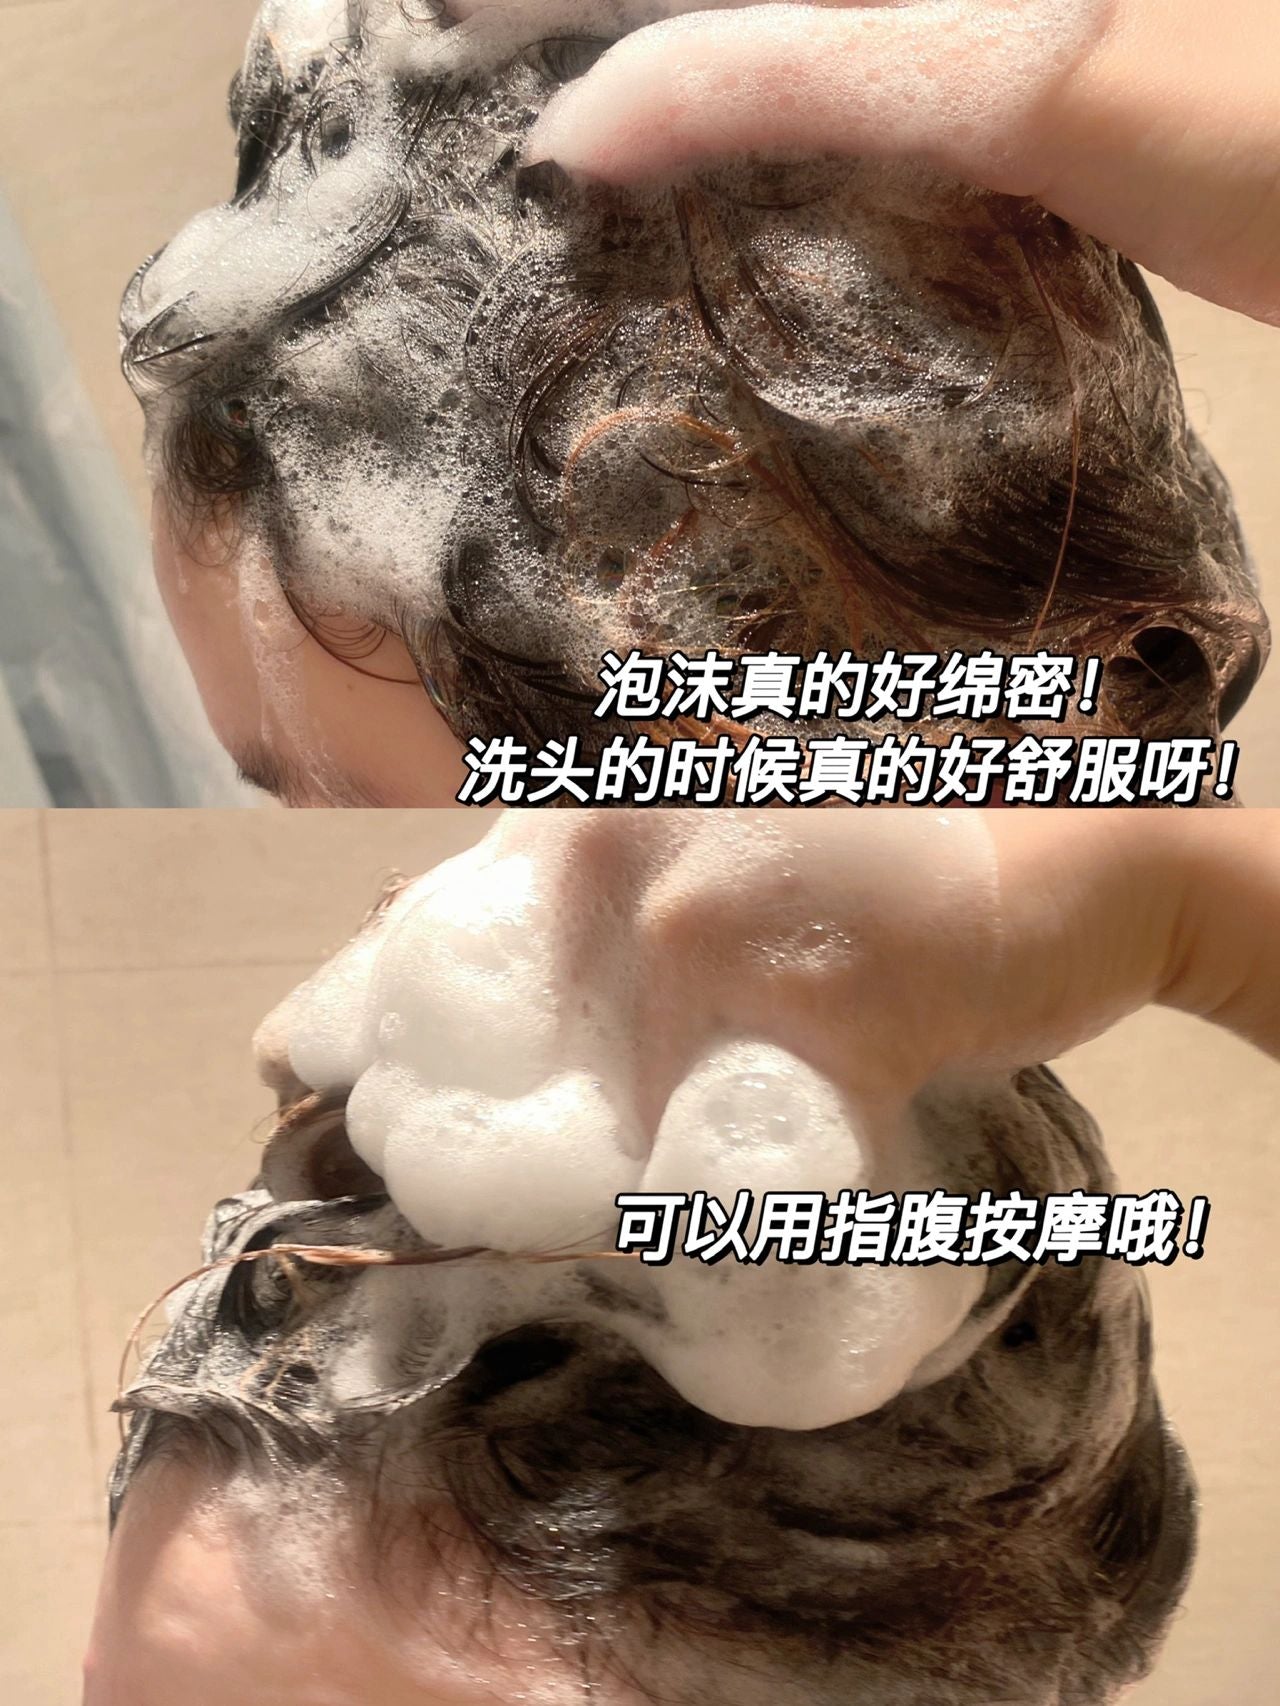 Japan &Honey Watery Sense Nourishing Cherry Blossom Sakura Shampoos/Conditioner/Hair Oil 440ml/445ml/100ml 日本安蒂花子樱花水感丰盈滋养洗发水护发素